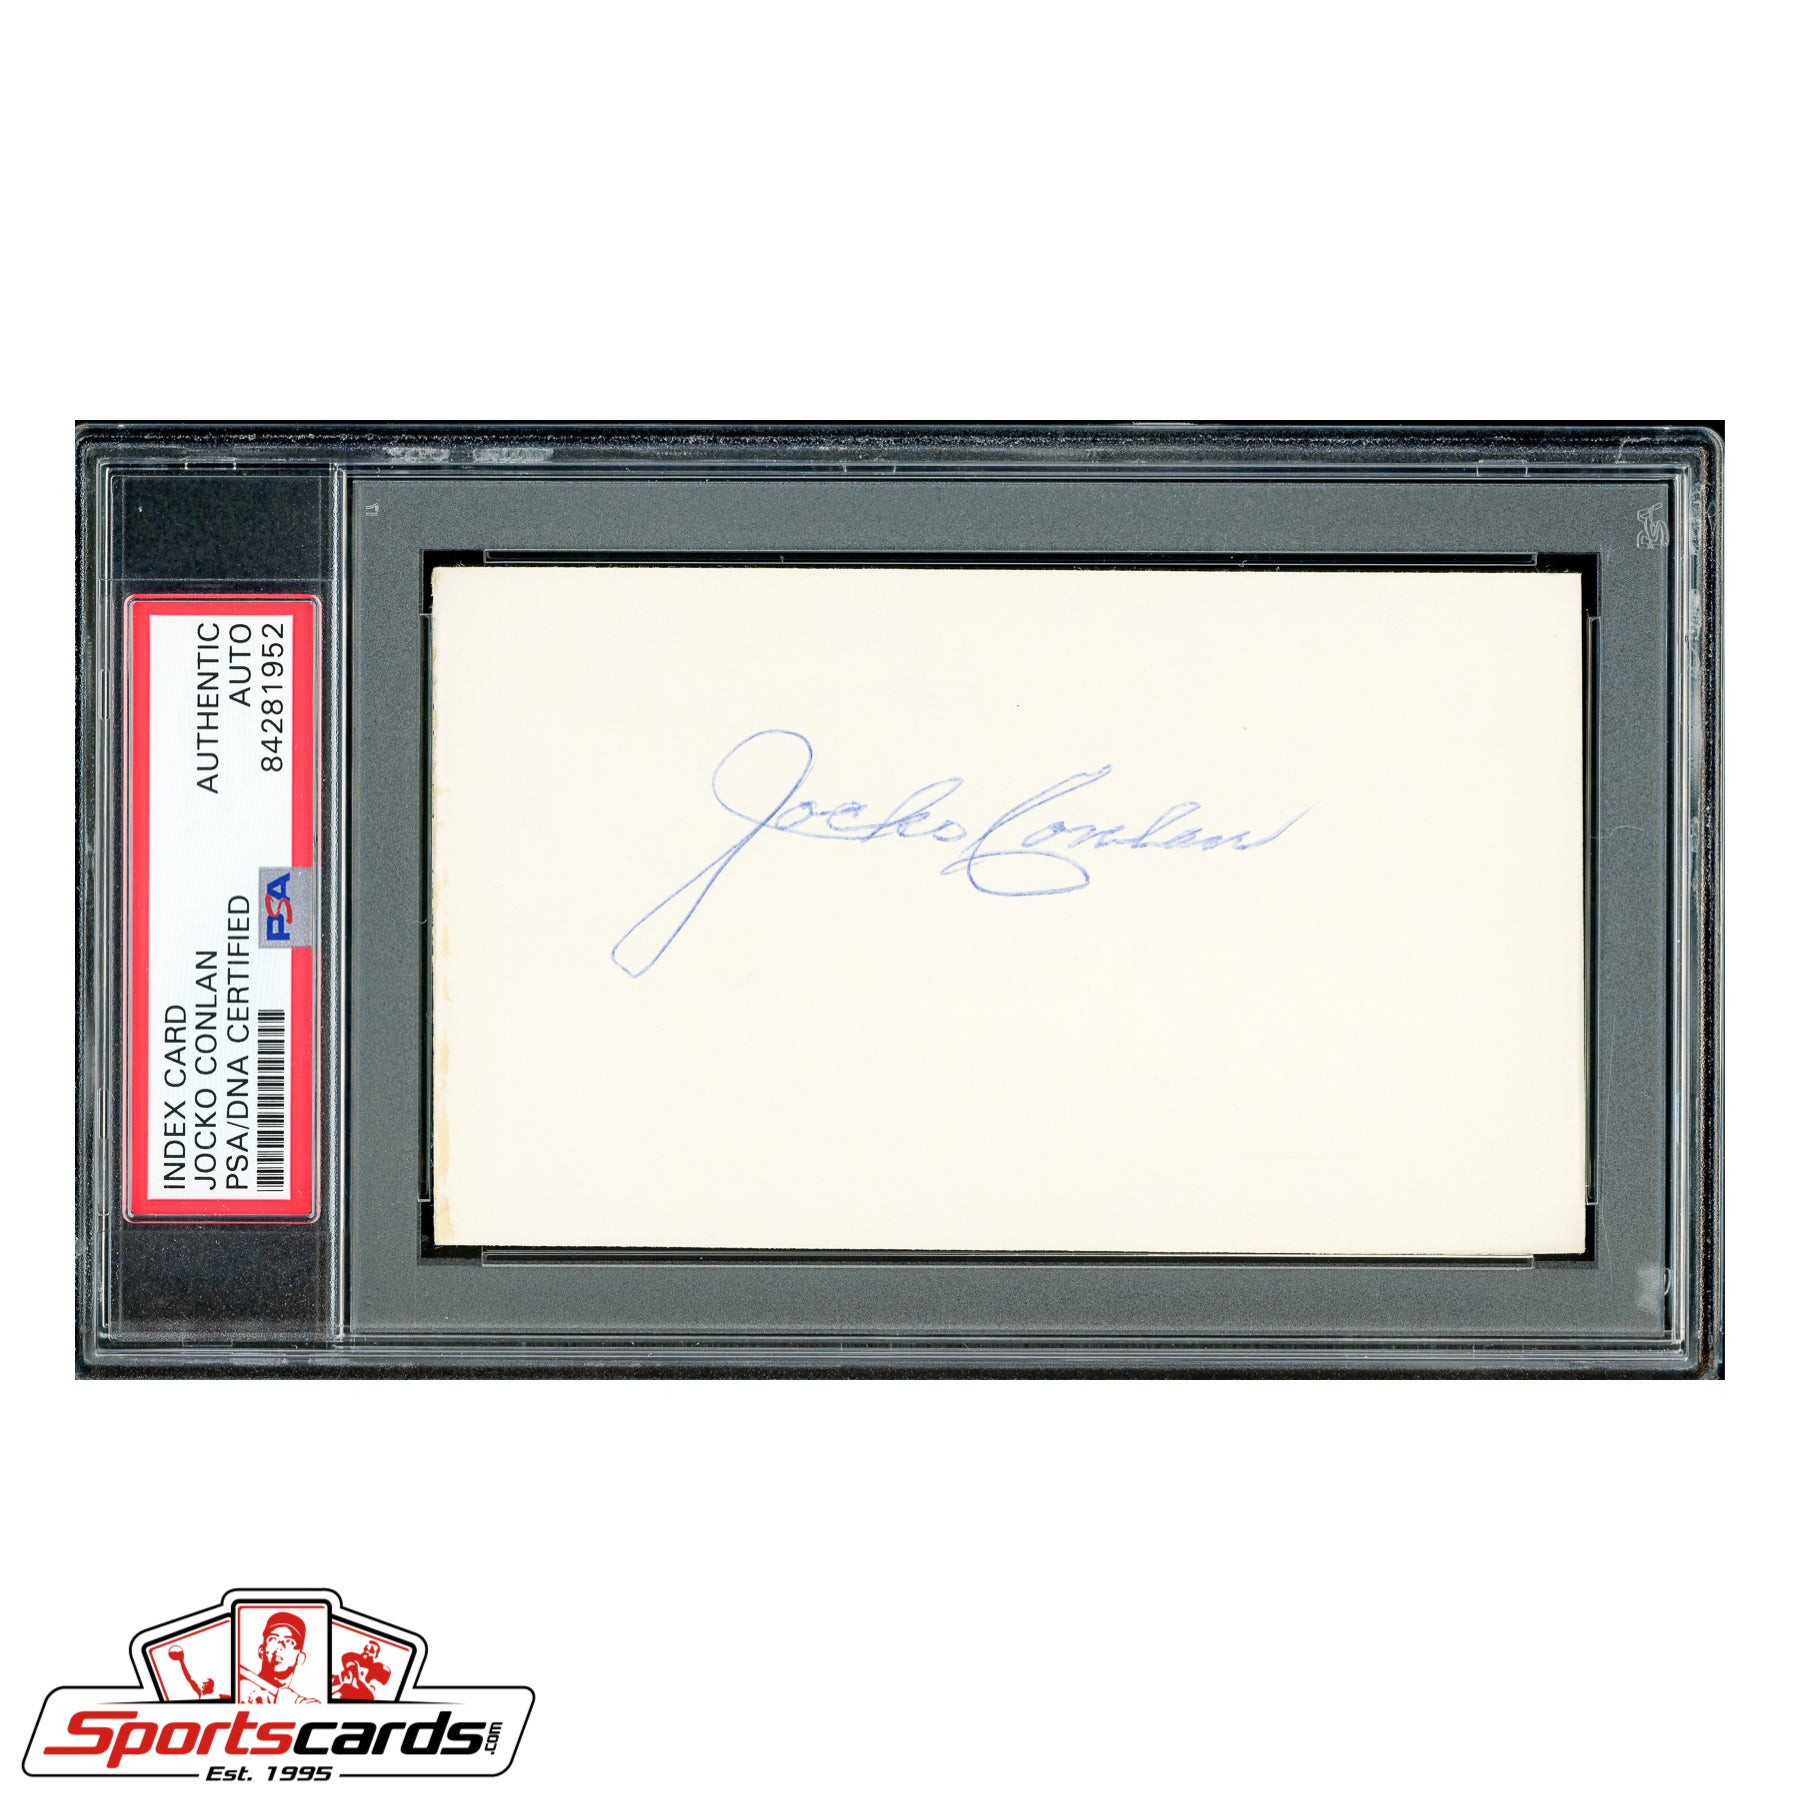 Jocko Conlan Signed Auto 3x5 Index Card - PSA/DNA